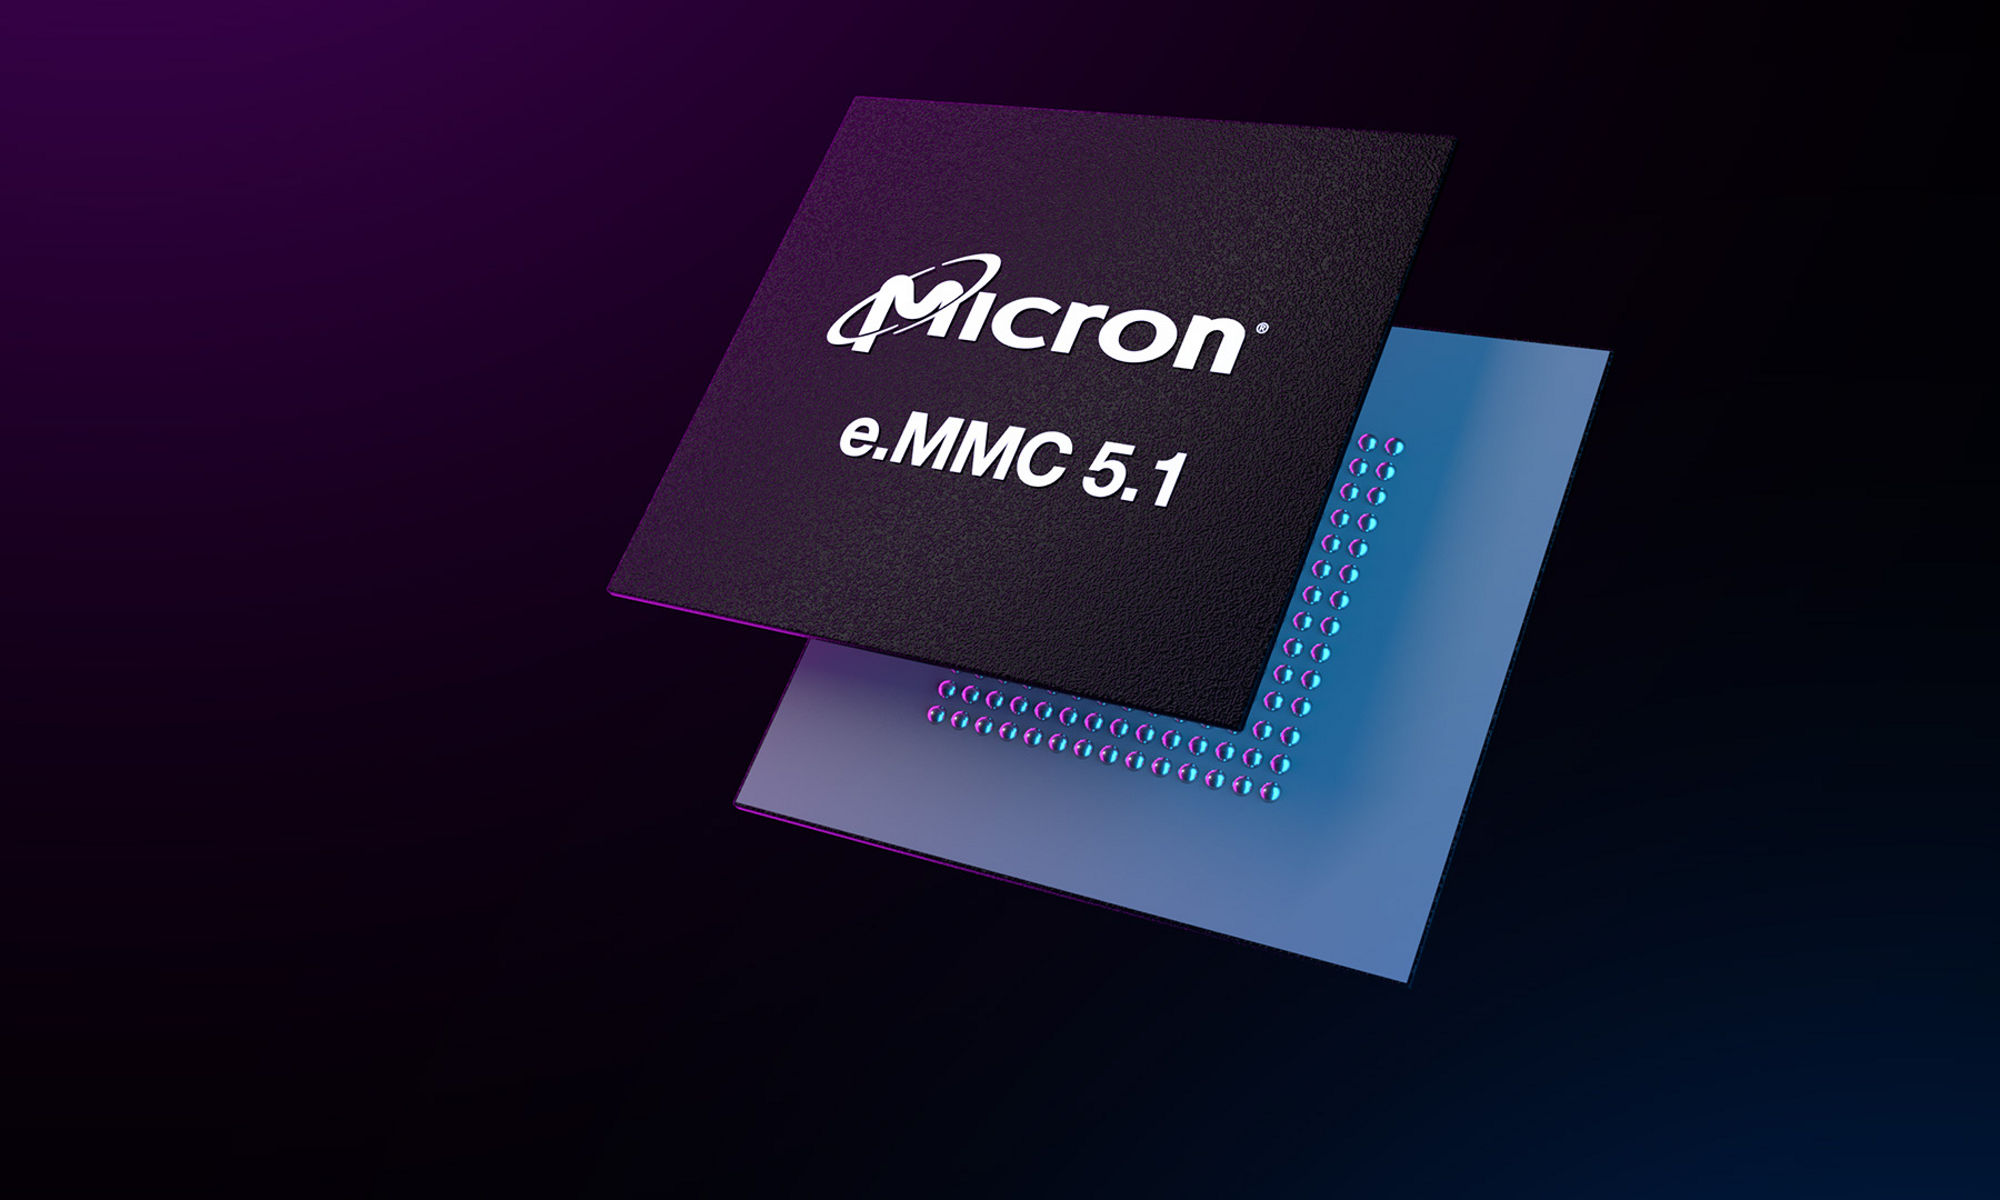 Micron e.MMC 5.1 device